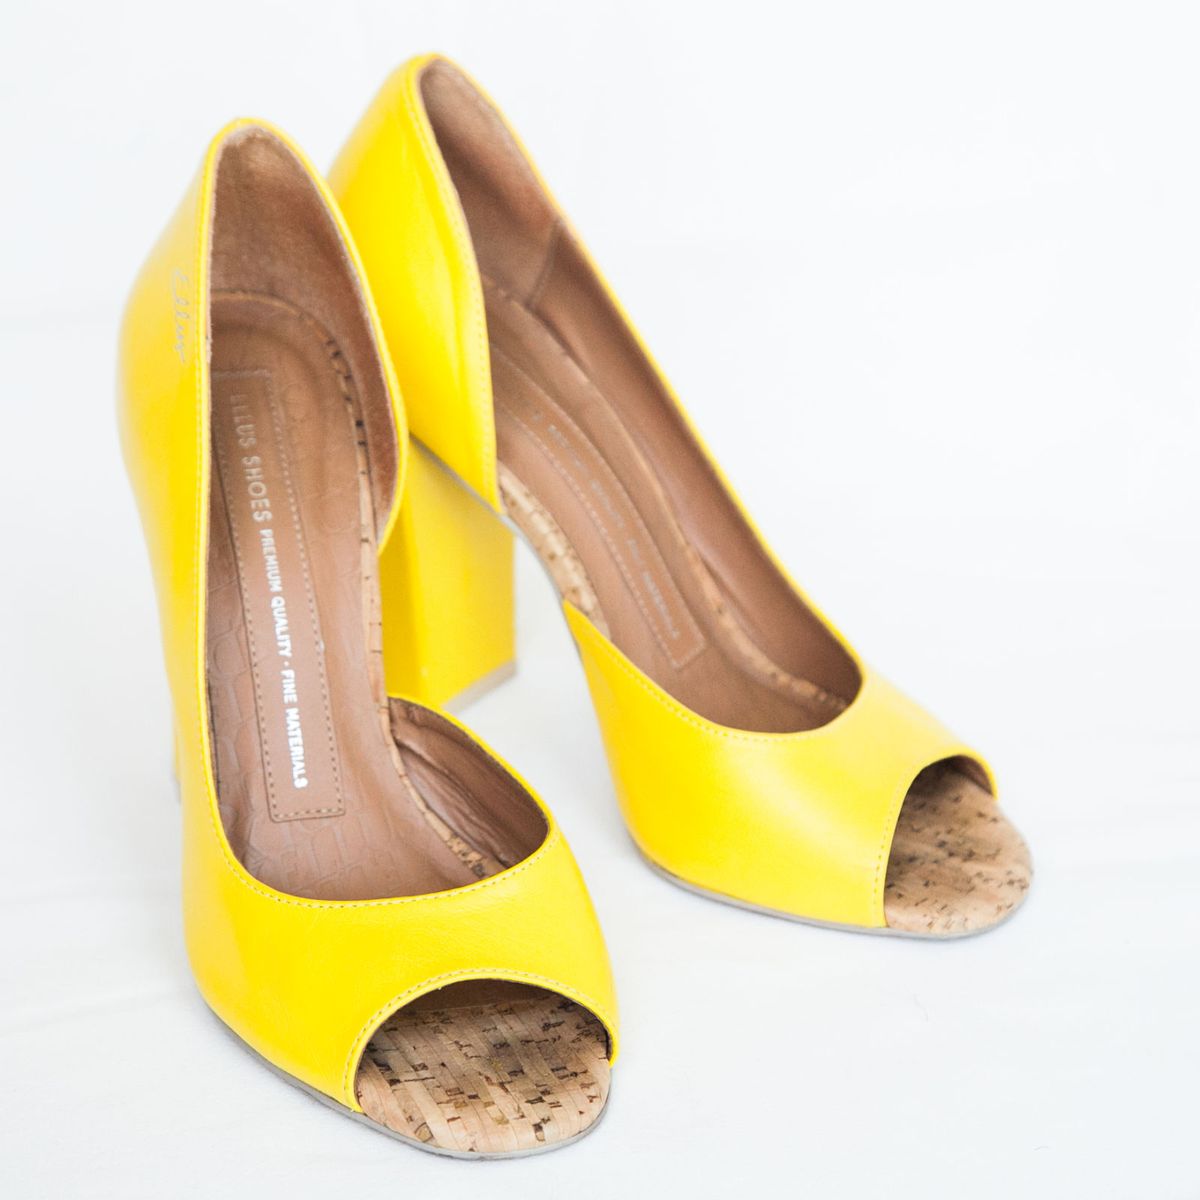 sapato feminino amarelo